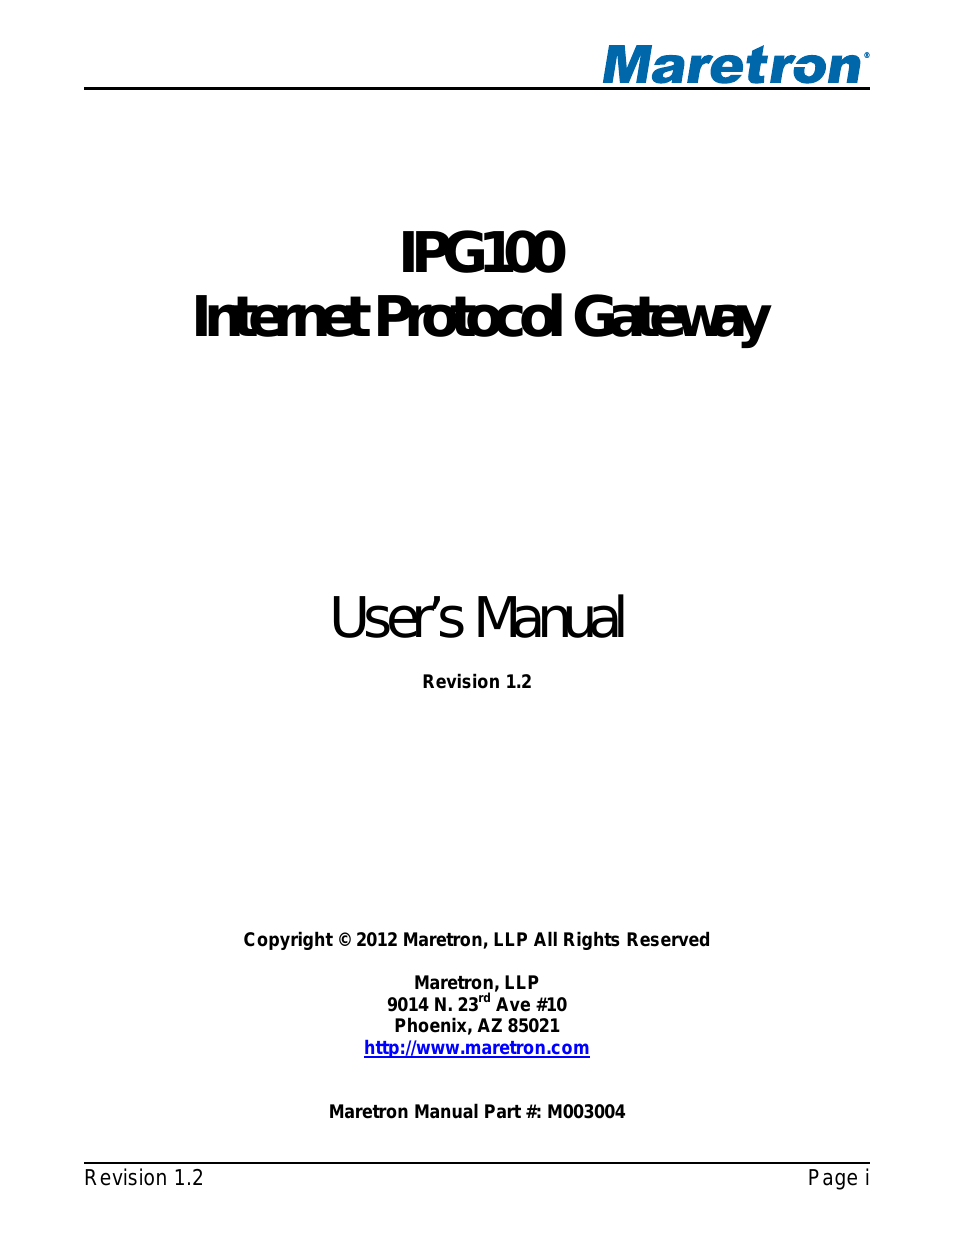 INTERNET PROTOCOL GATEWAY IPG100